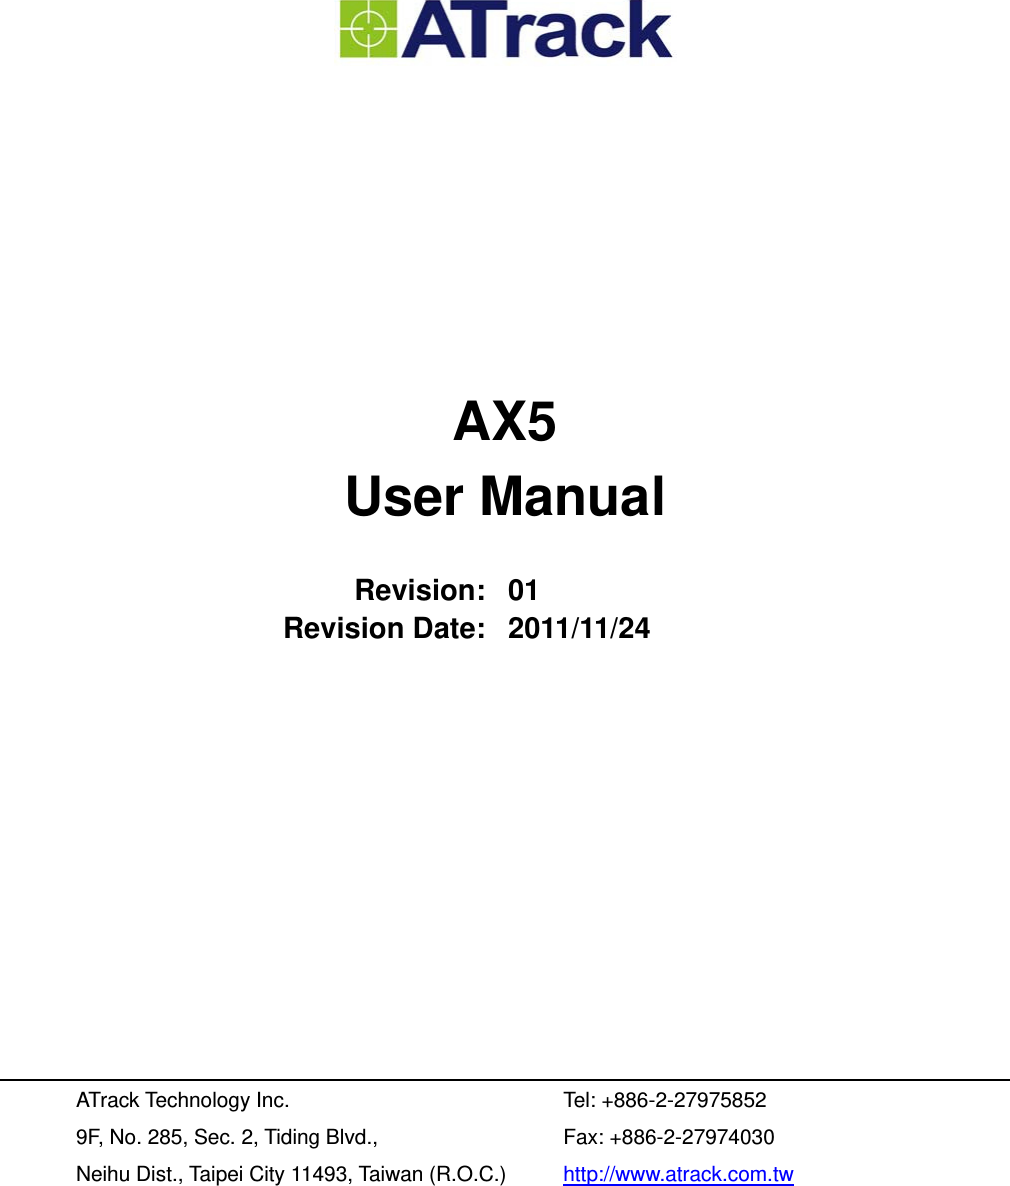          AX5 User Manual  Revision: 01 Revision Date: 2011/11/24           ATrack Technology Inc.  Tel: +886-2-27975852 9F, No. 285, Sec. 2, Tiding Blvd.,  Fax: +886-2-27974030 Neihu Dist., Taipei City 11493, Taiwan (R.O.C.)  http://www.atrack.com.tw  